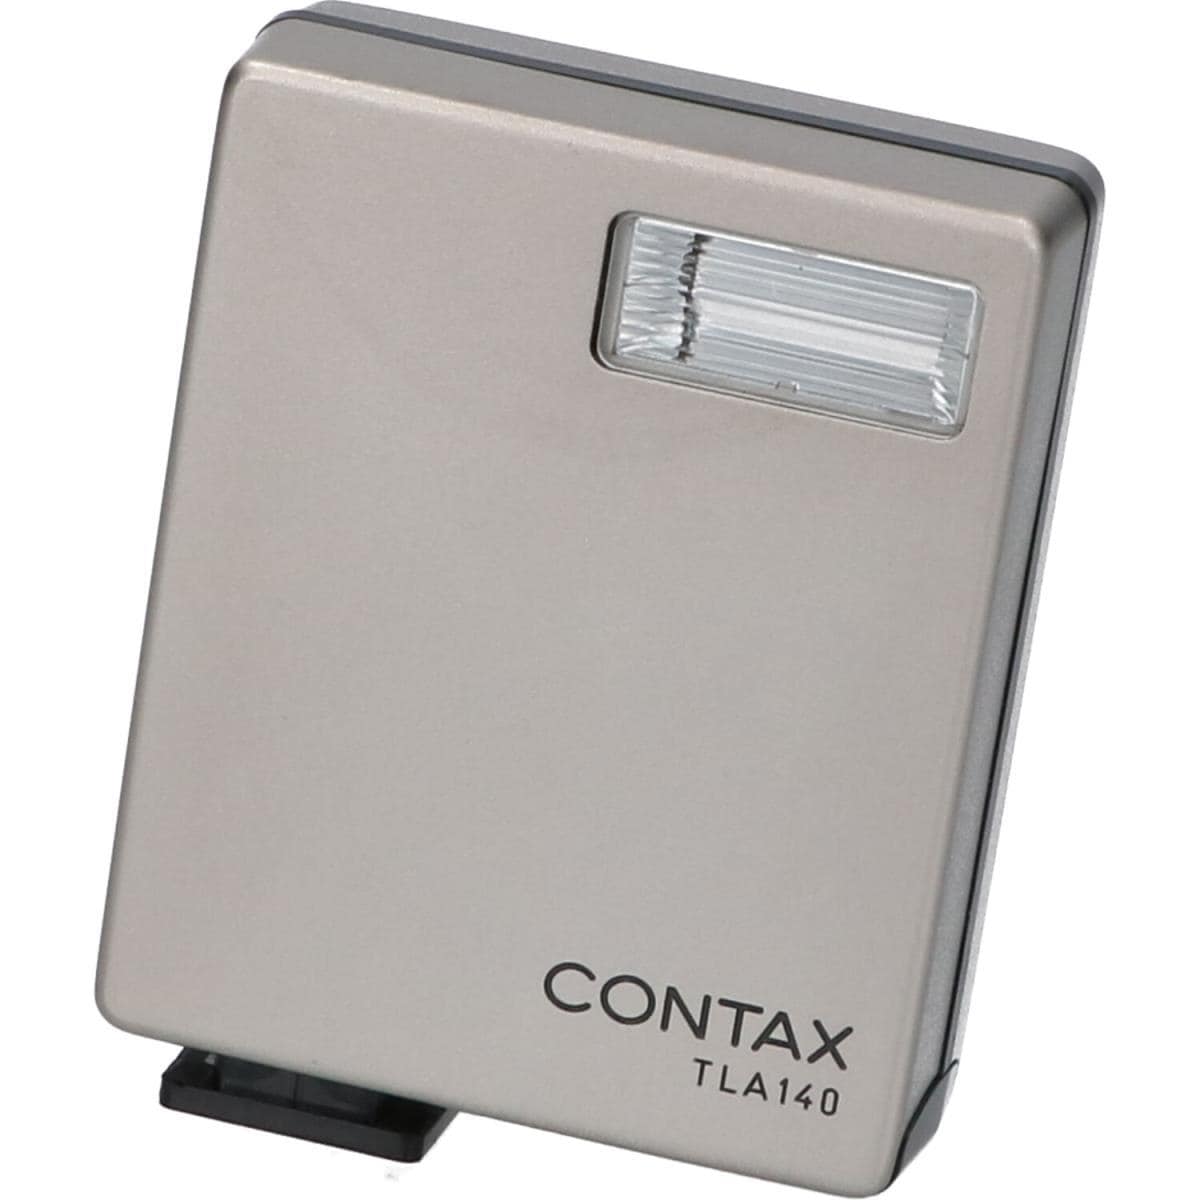 CONTAX TLA140